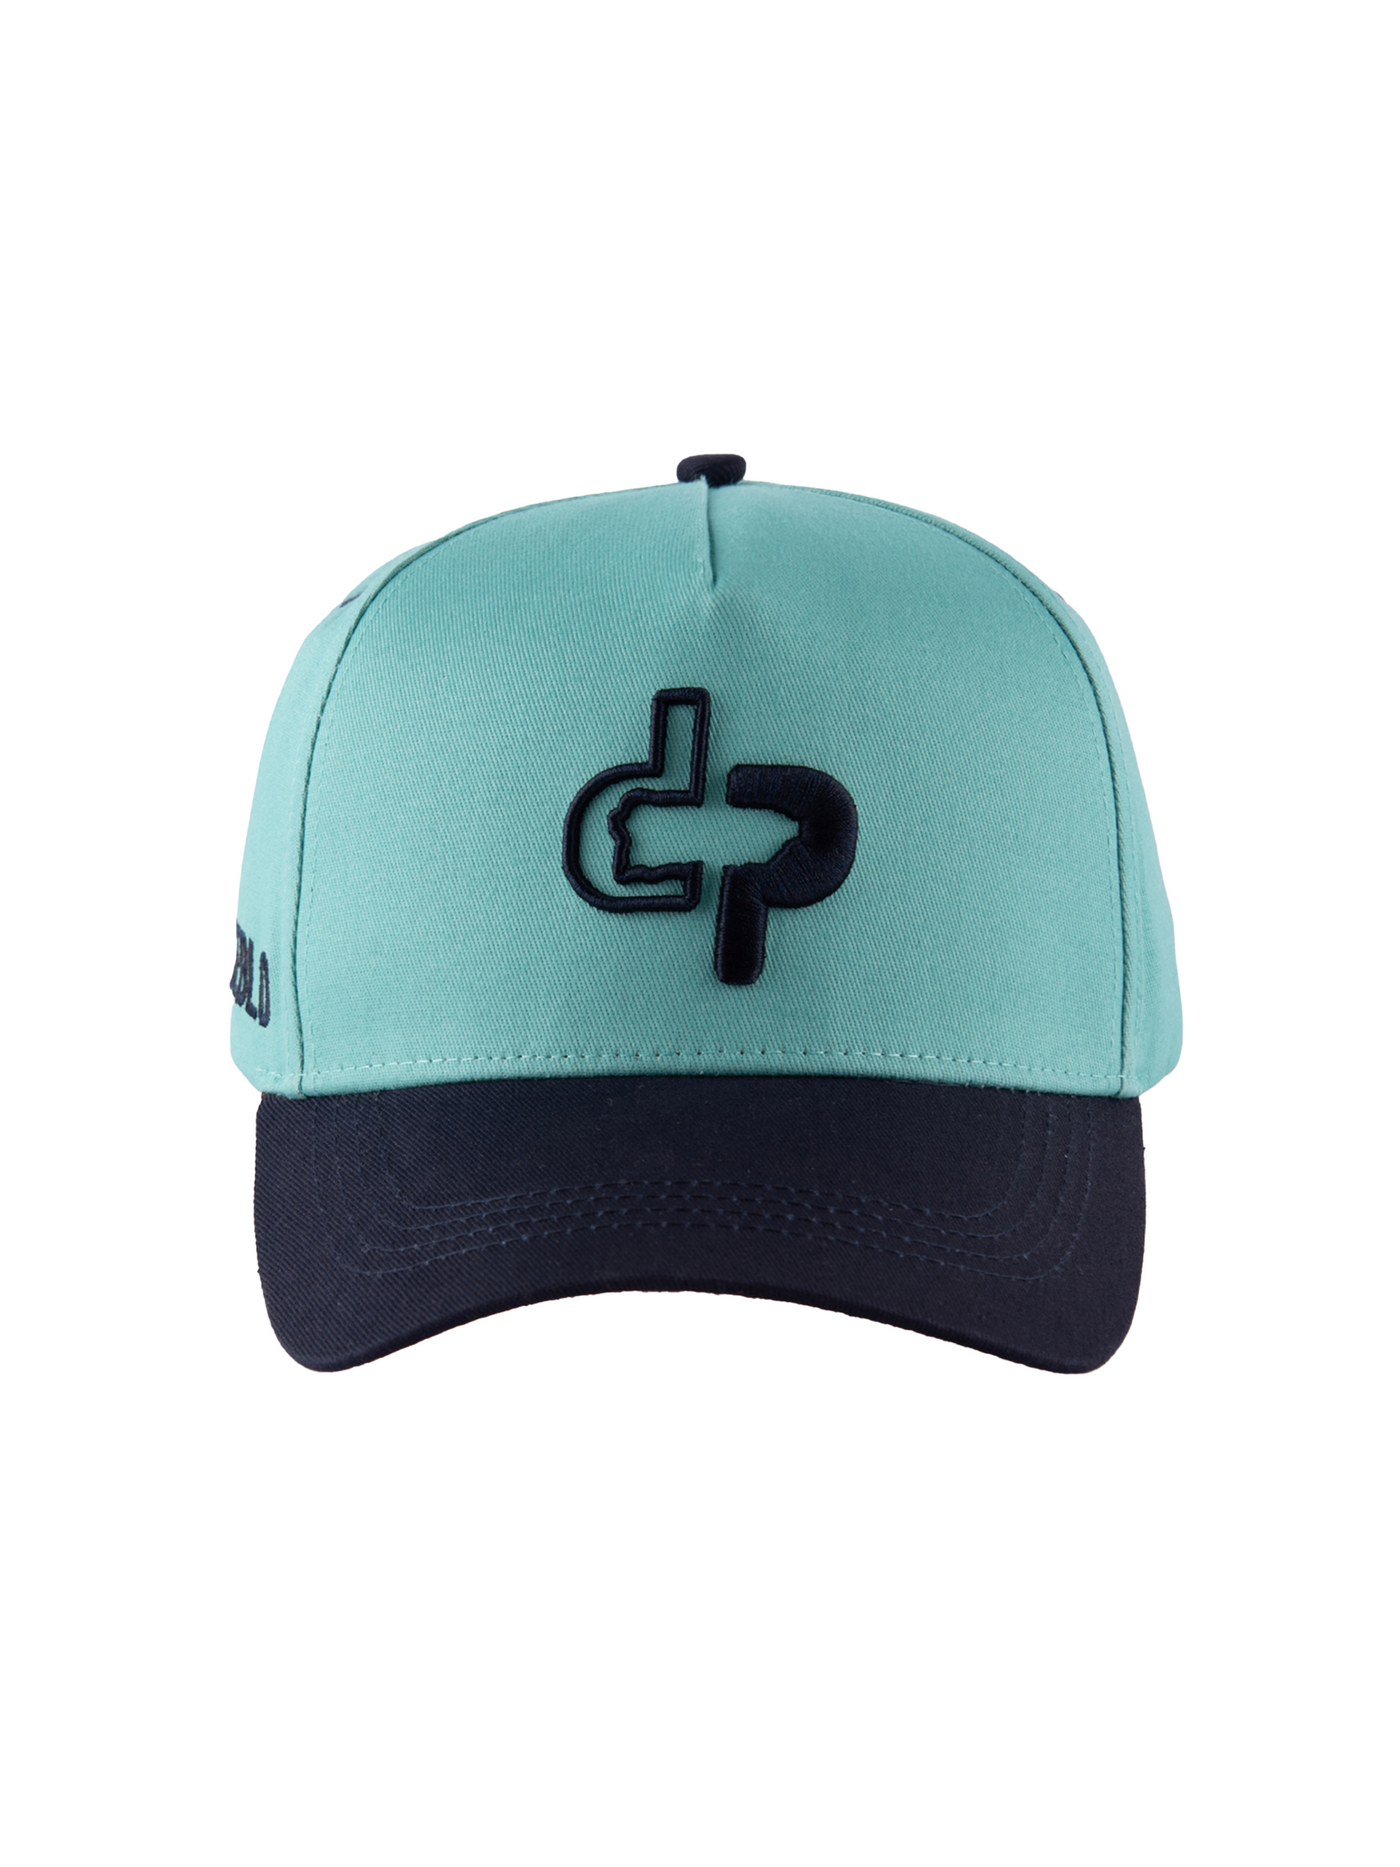 DP ICON - Baseball Cap - Teal